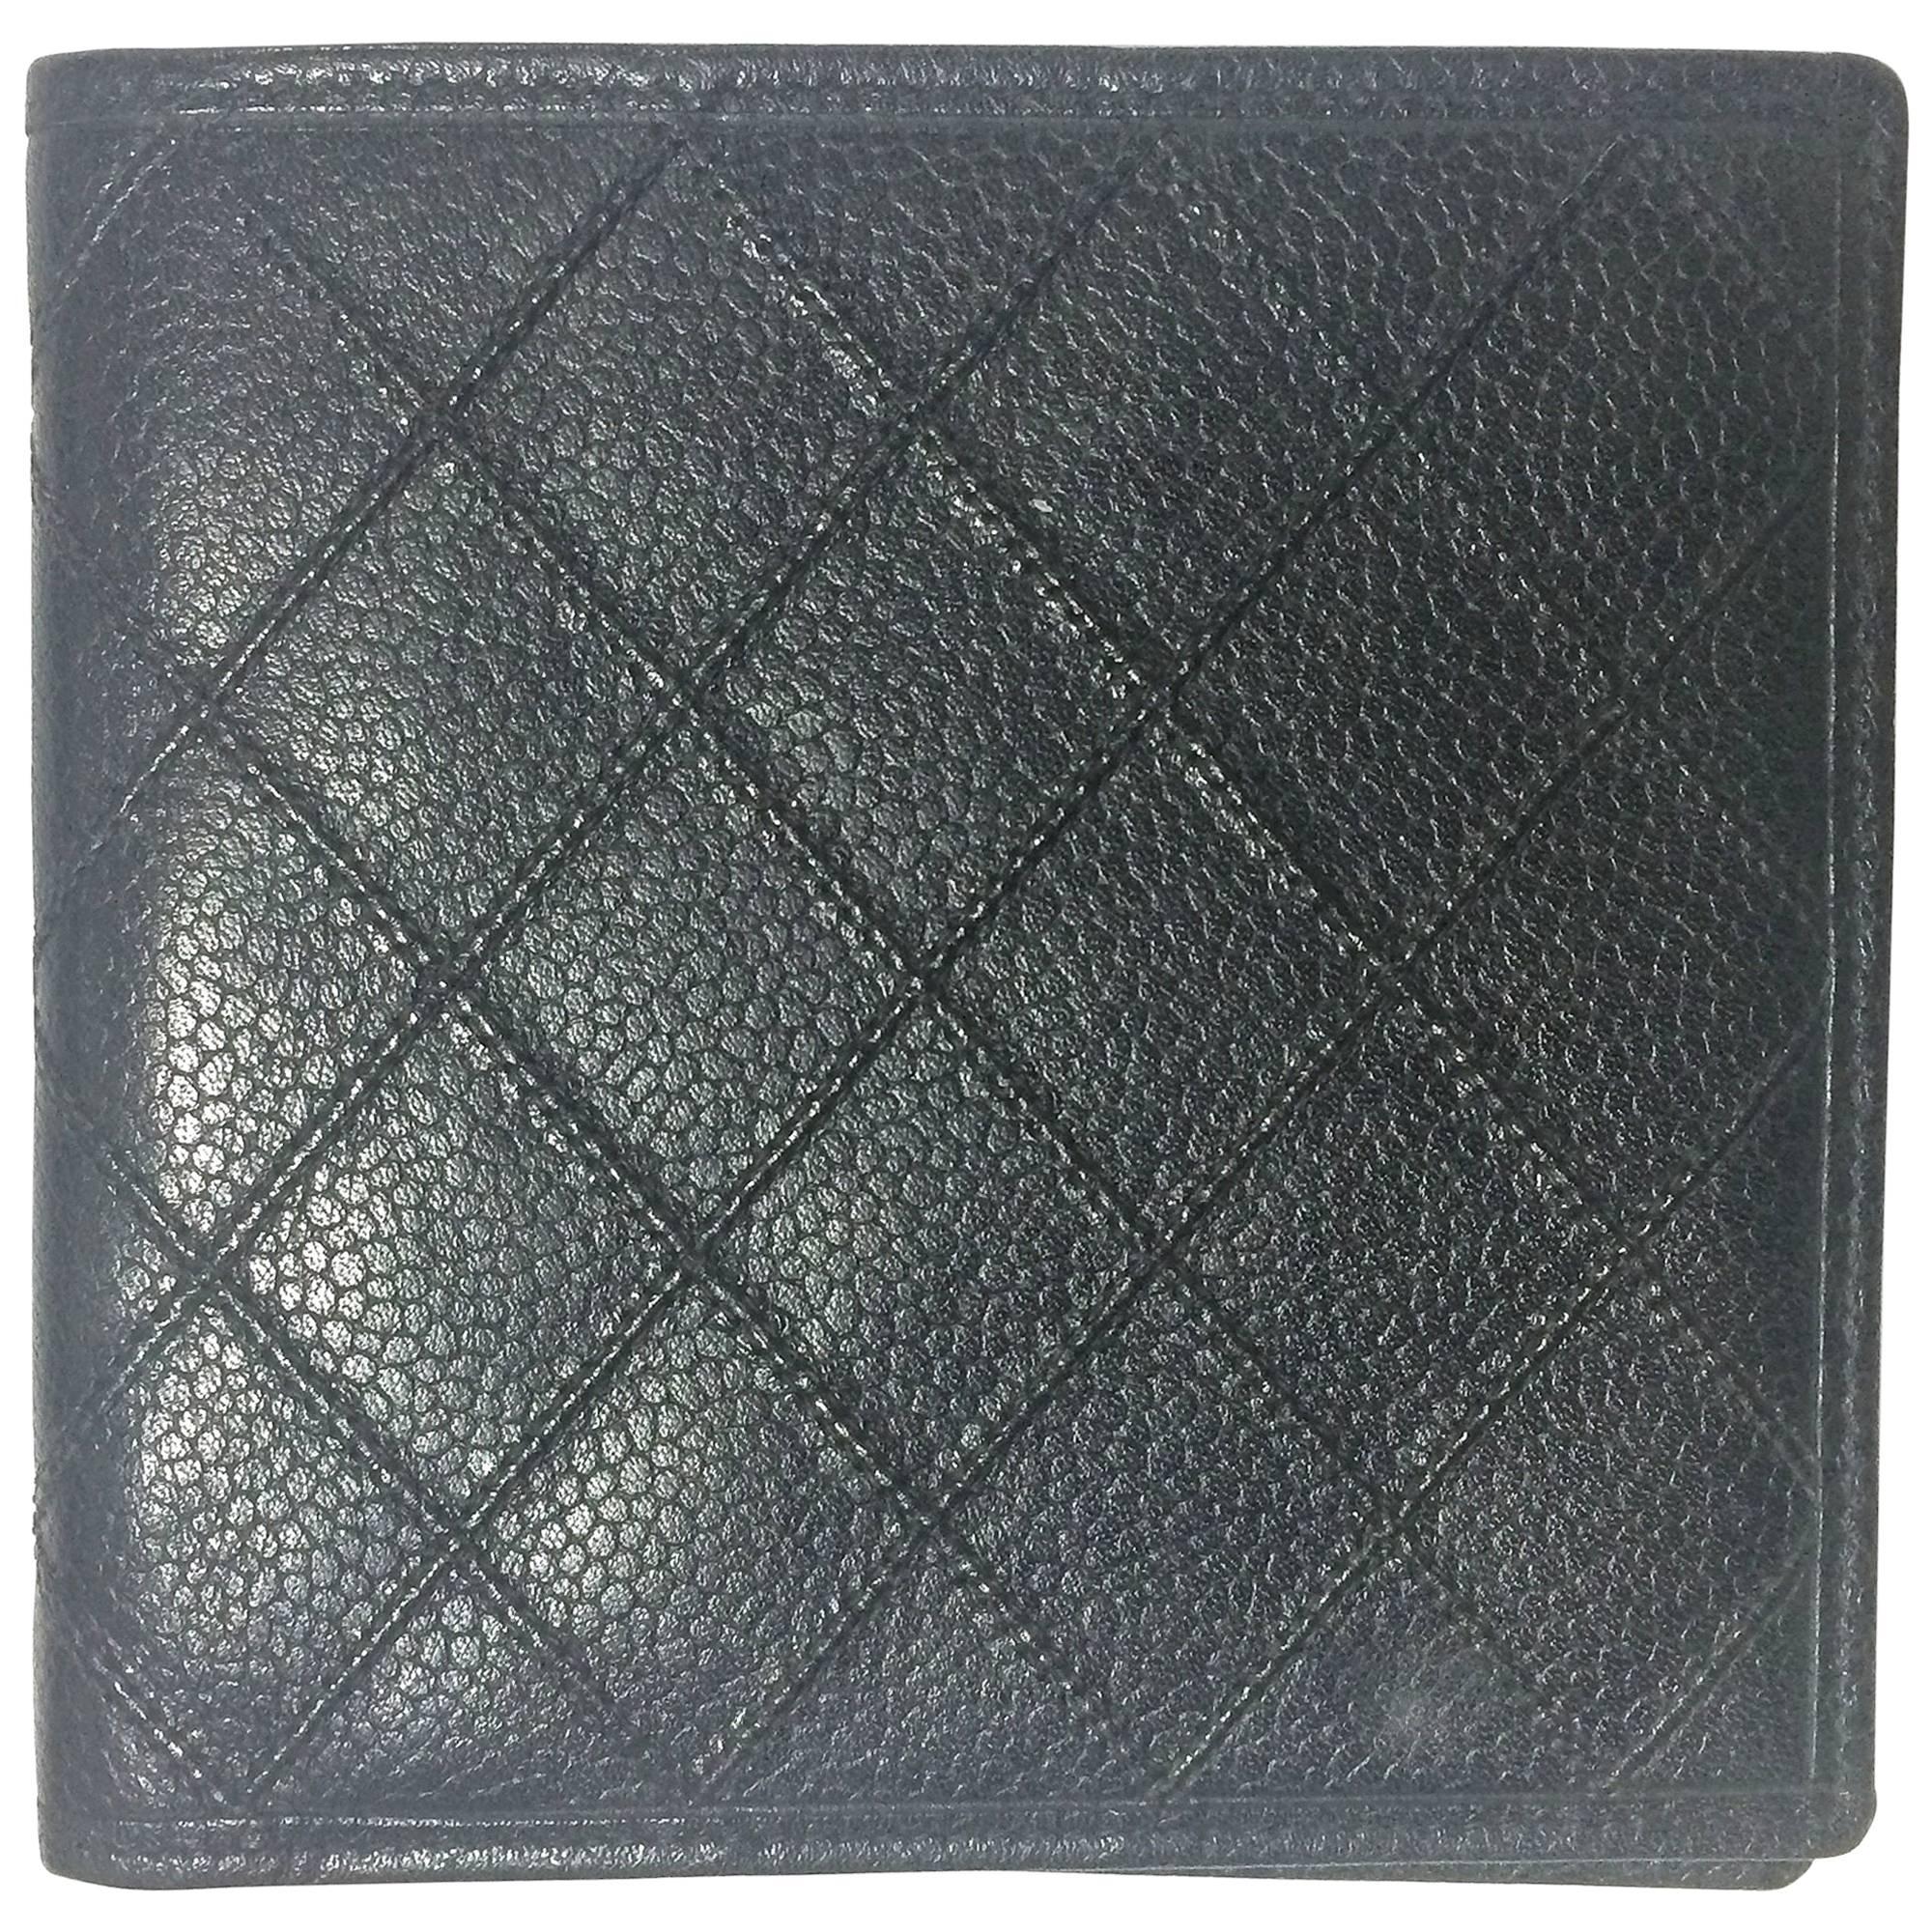 MINT. Vintage CHANEL black caviar leather square wallet, bill, card case. Unisex